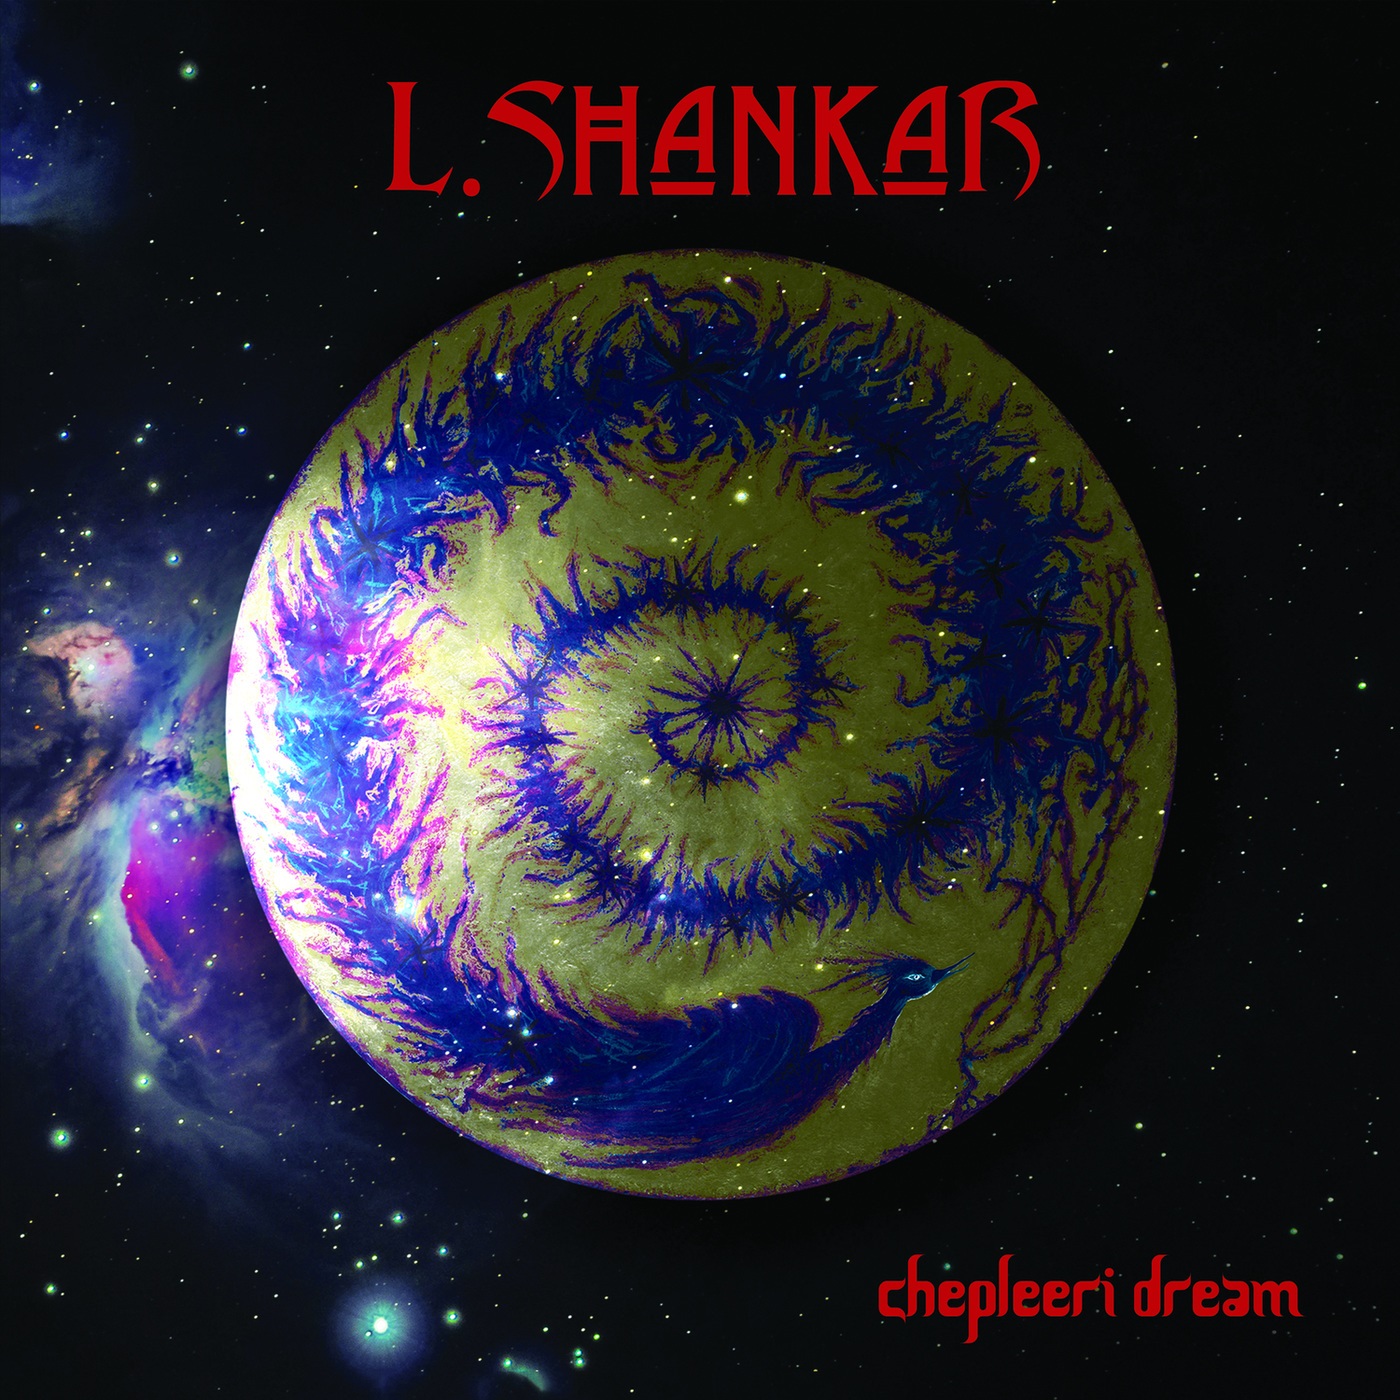 L. Shankar – Chepleeri Dream (2020) [FLAC 24bit/48kHz]